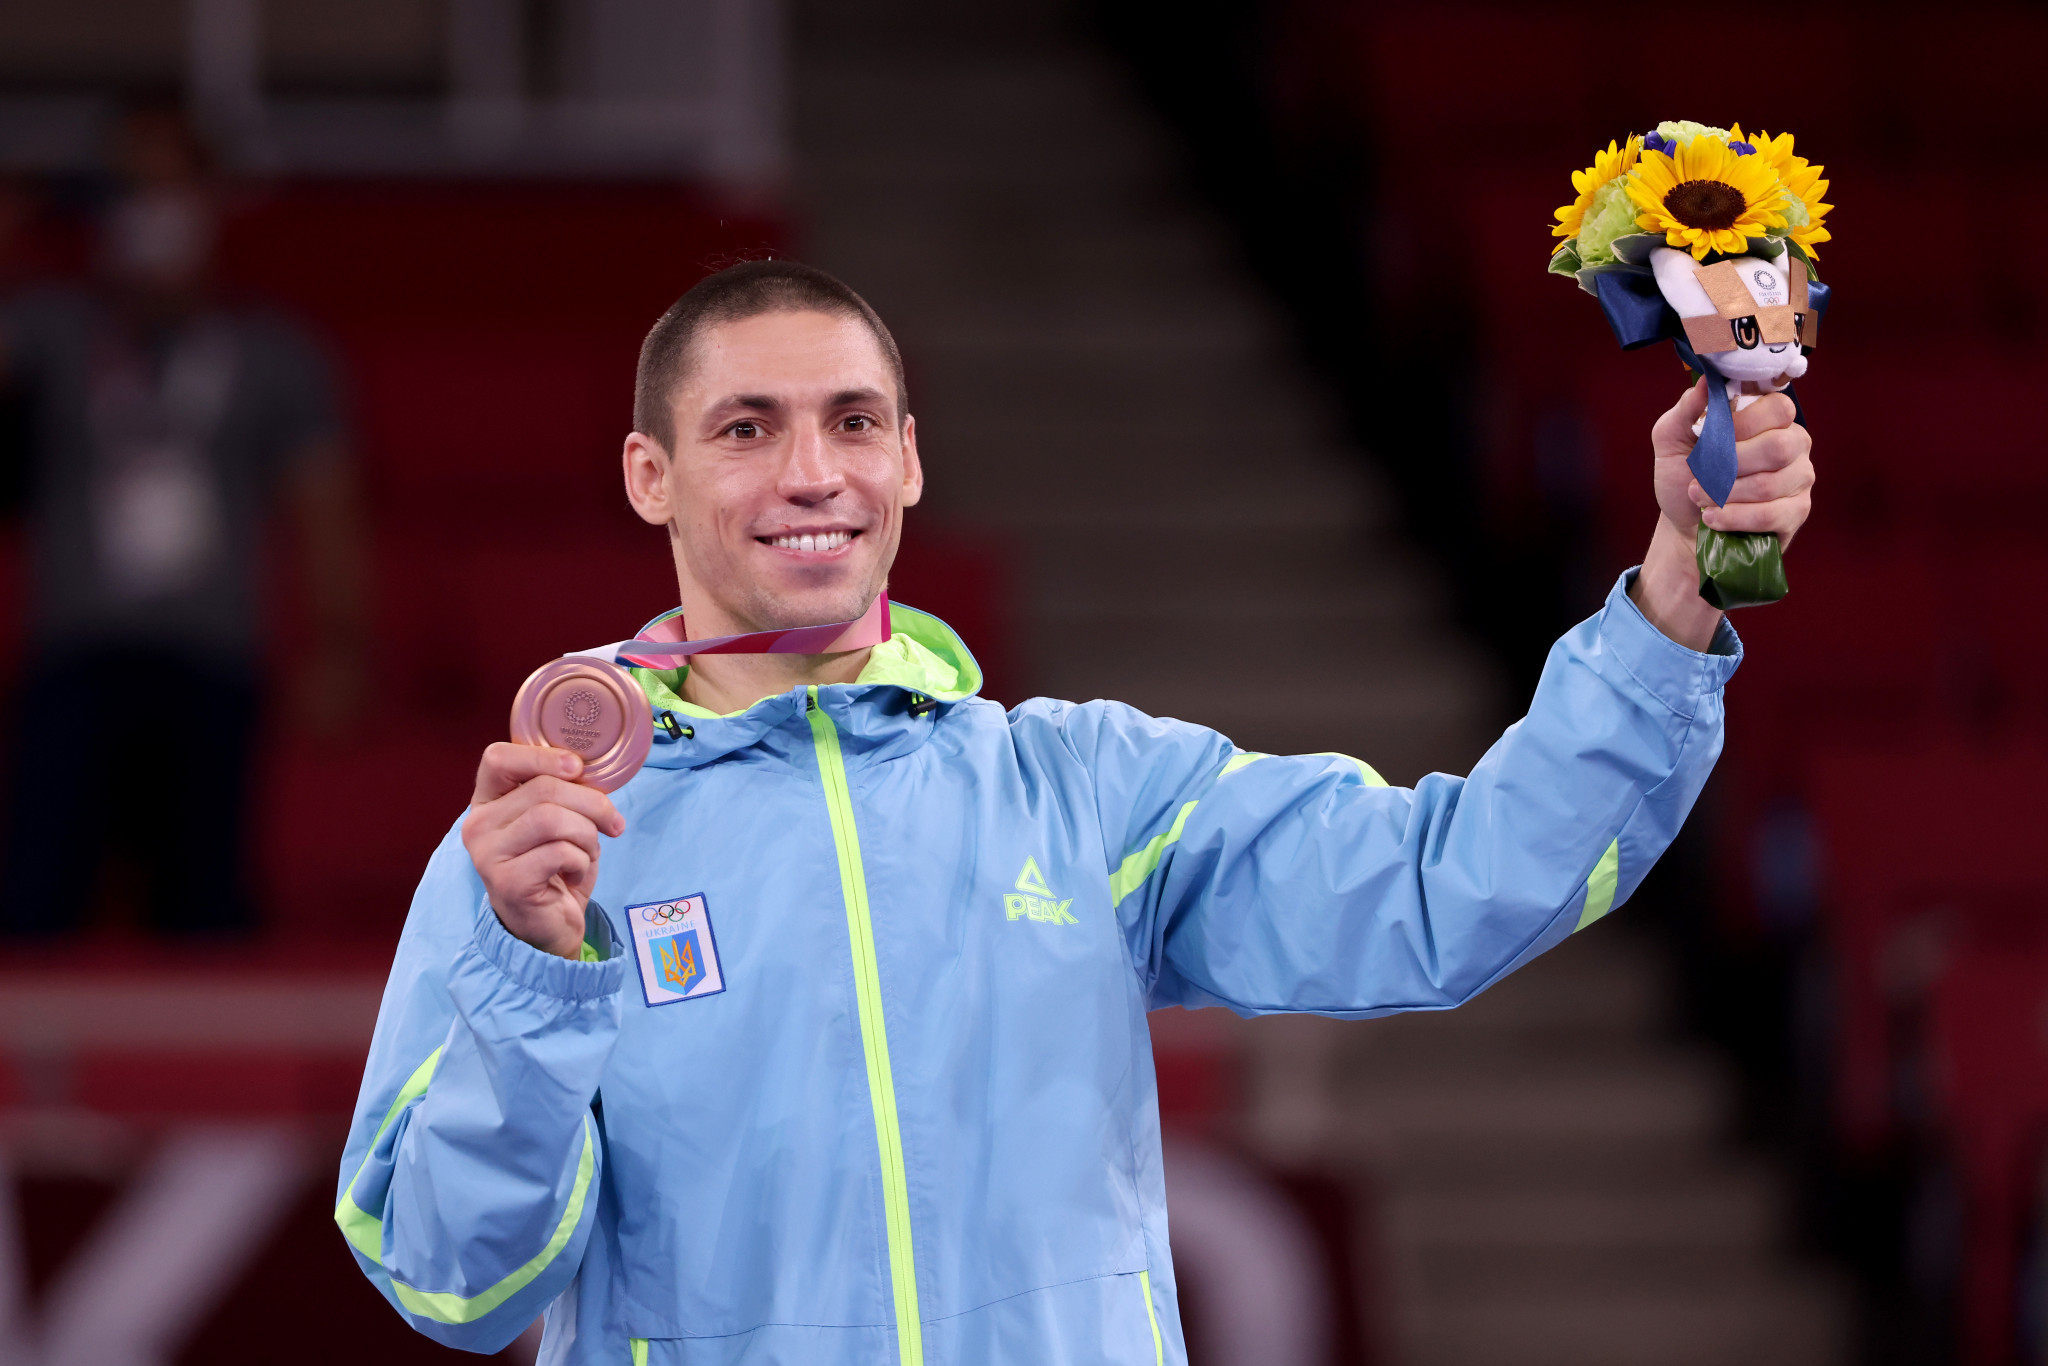 Auction winner offers to return Olympic bronze medal to Ukrainian karate star